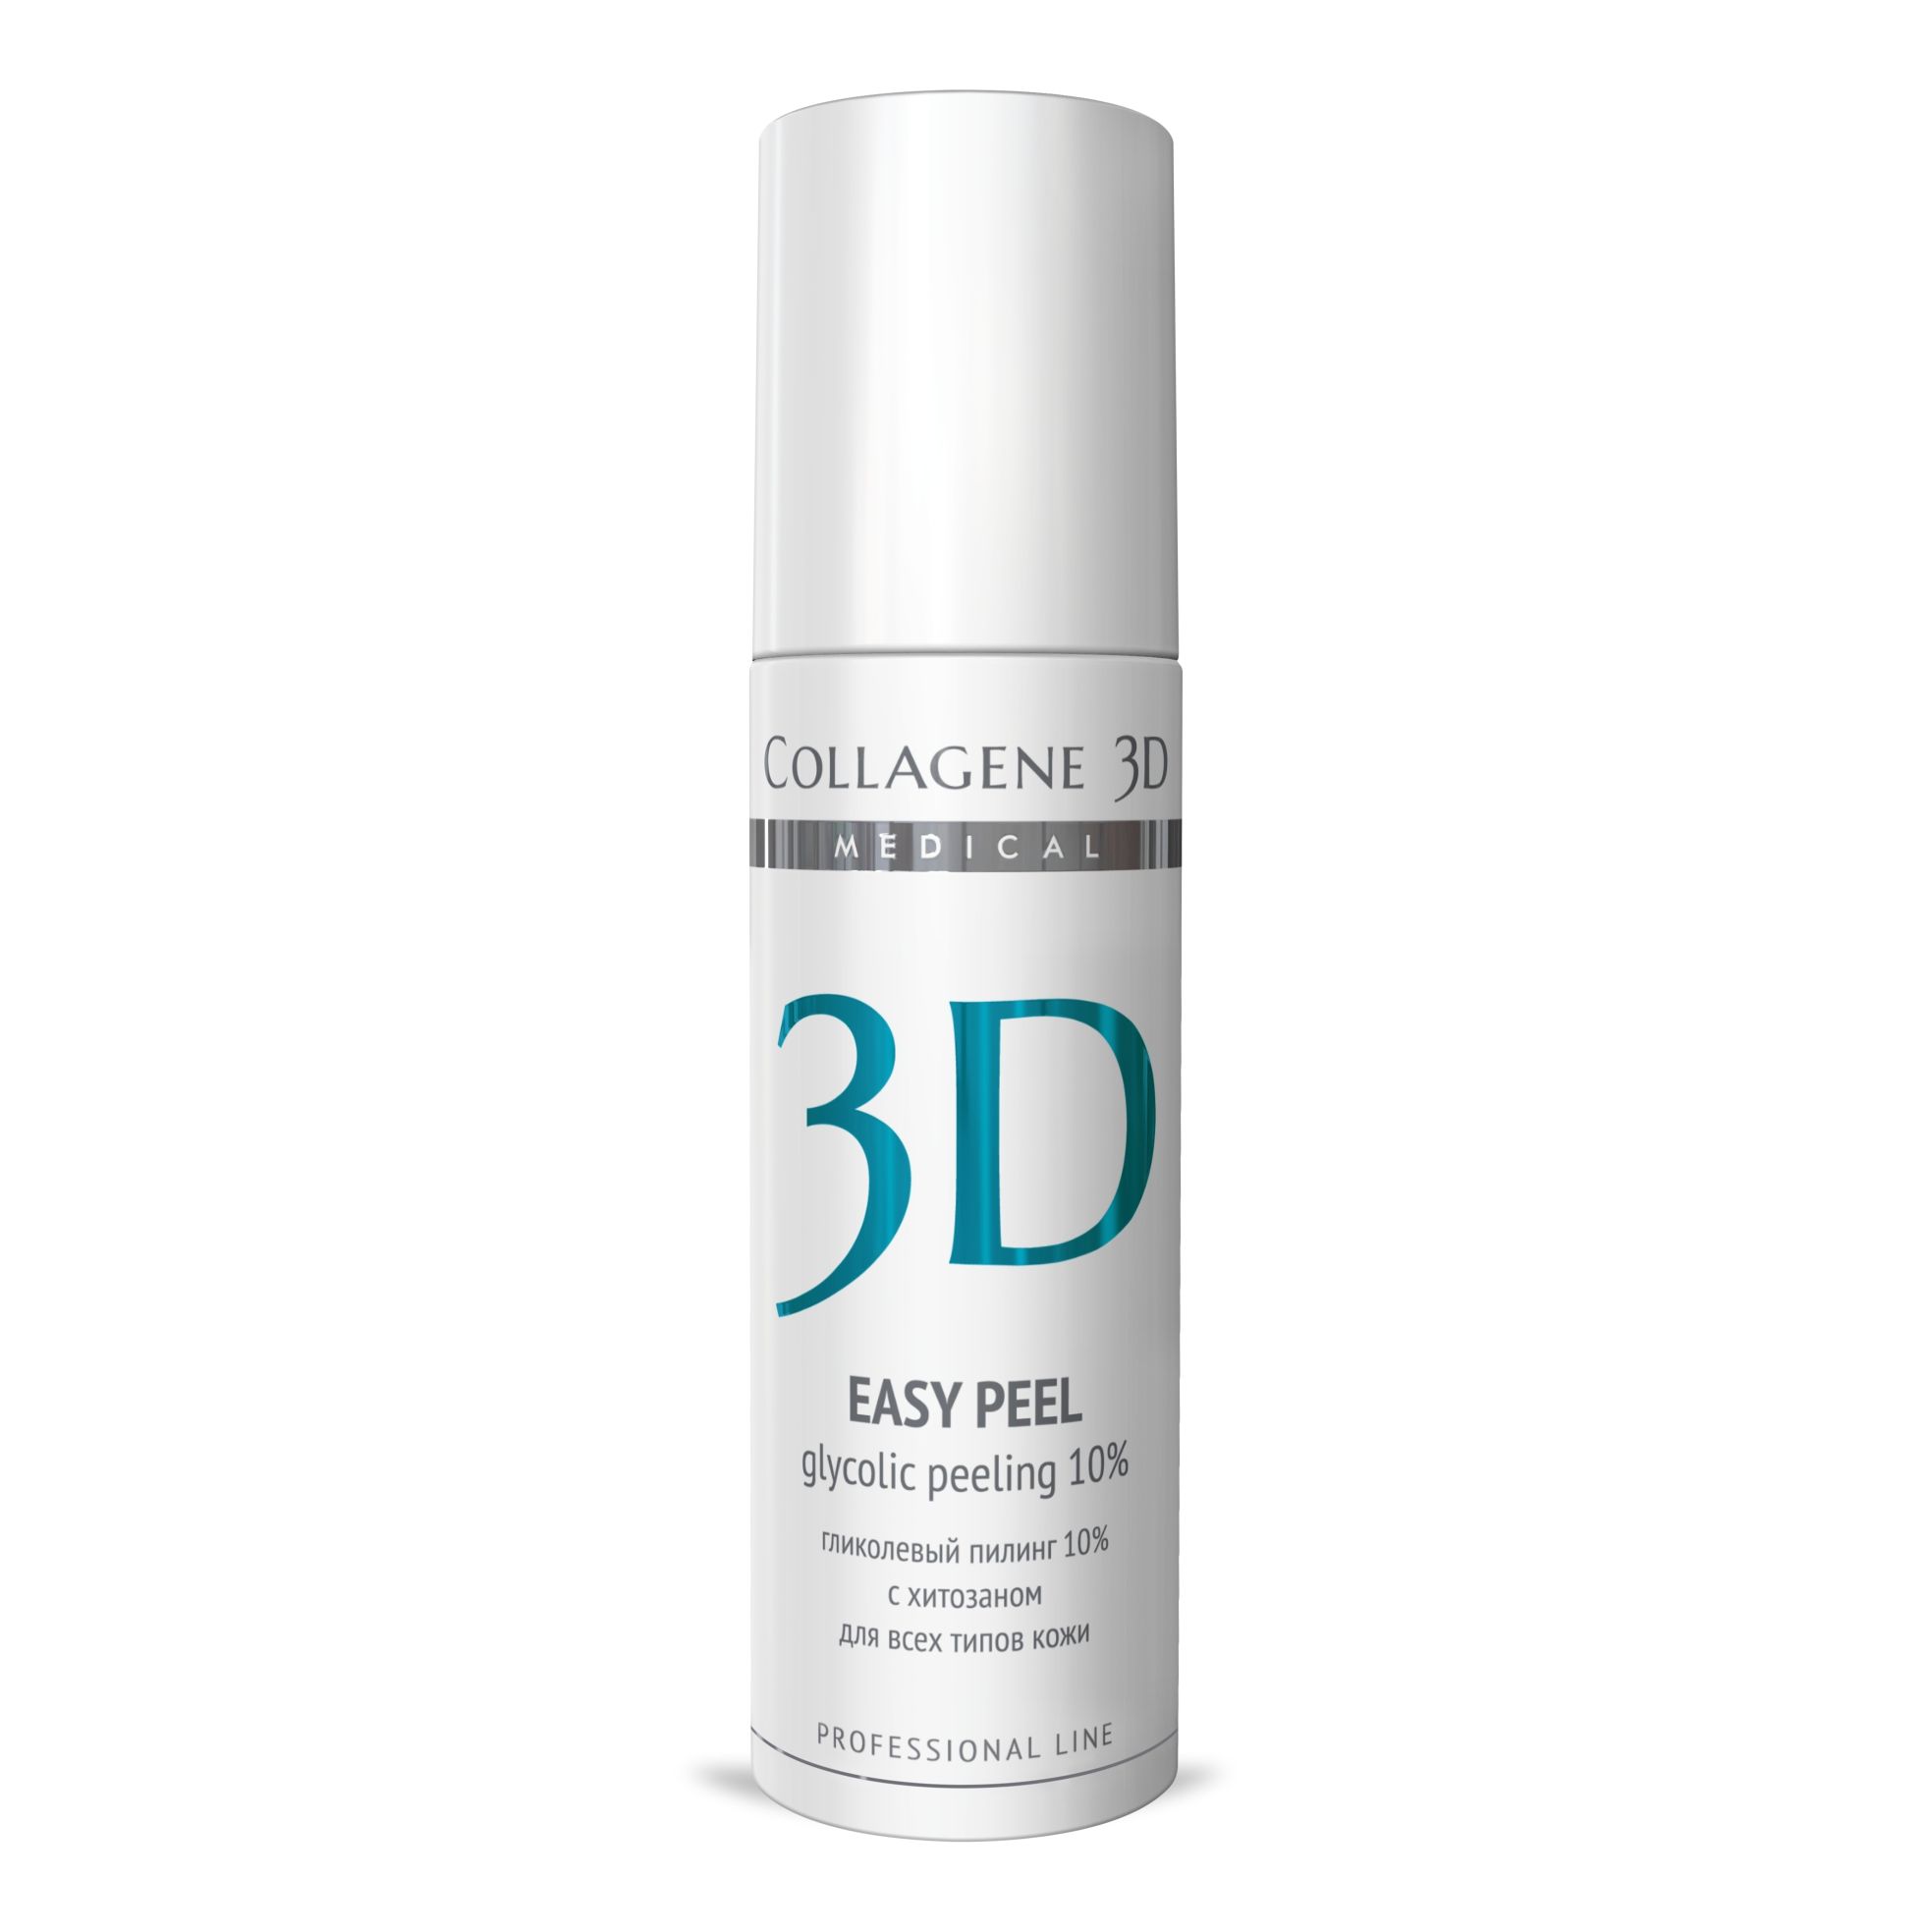 Пилинг для лица Medical Collagene 3D Easy Peel Glicolic Peeling 10% 130 мл medical collagene 3d пилинг с коллагеназой natural peel 150 мл